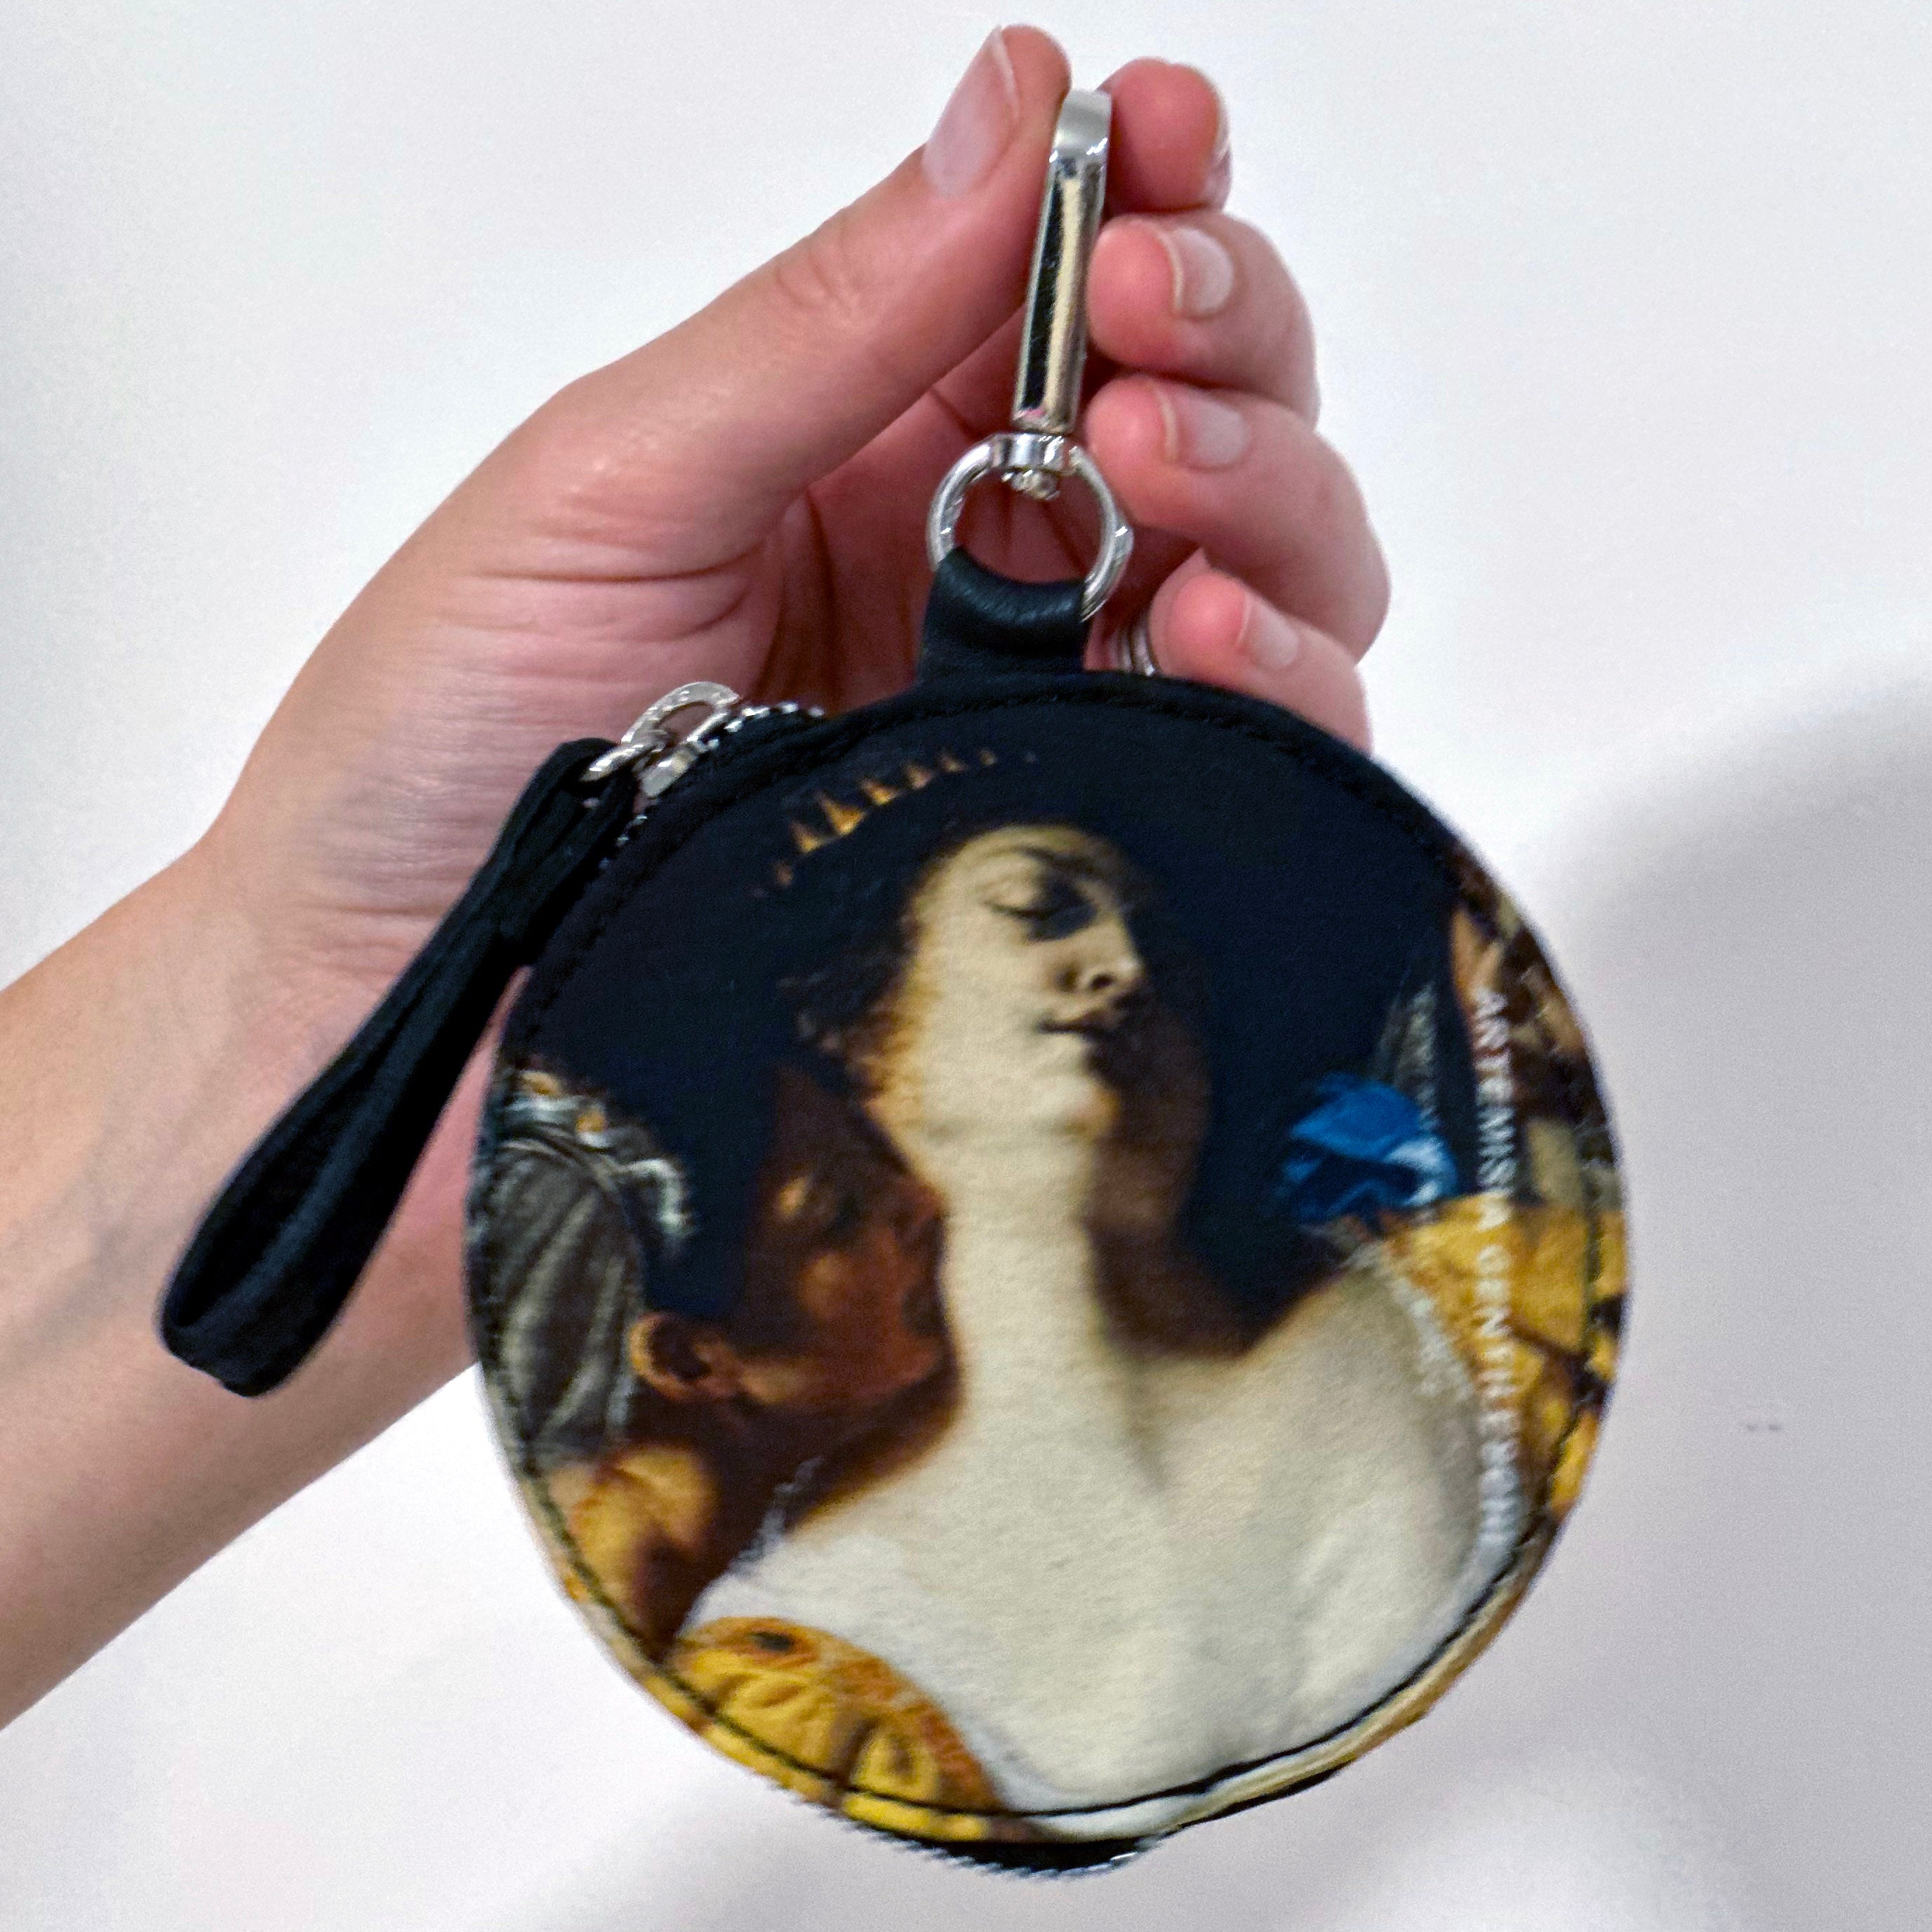 Hanging coin purse Bora Kiss